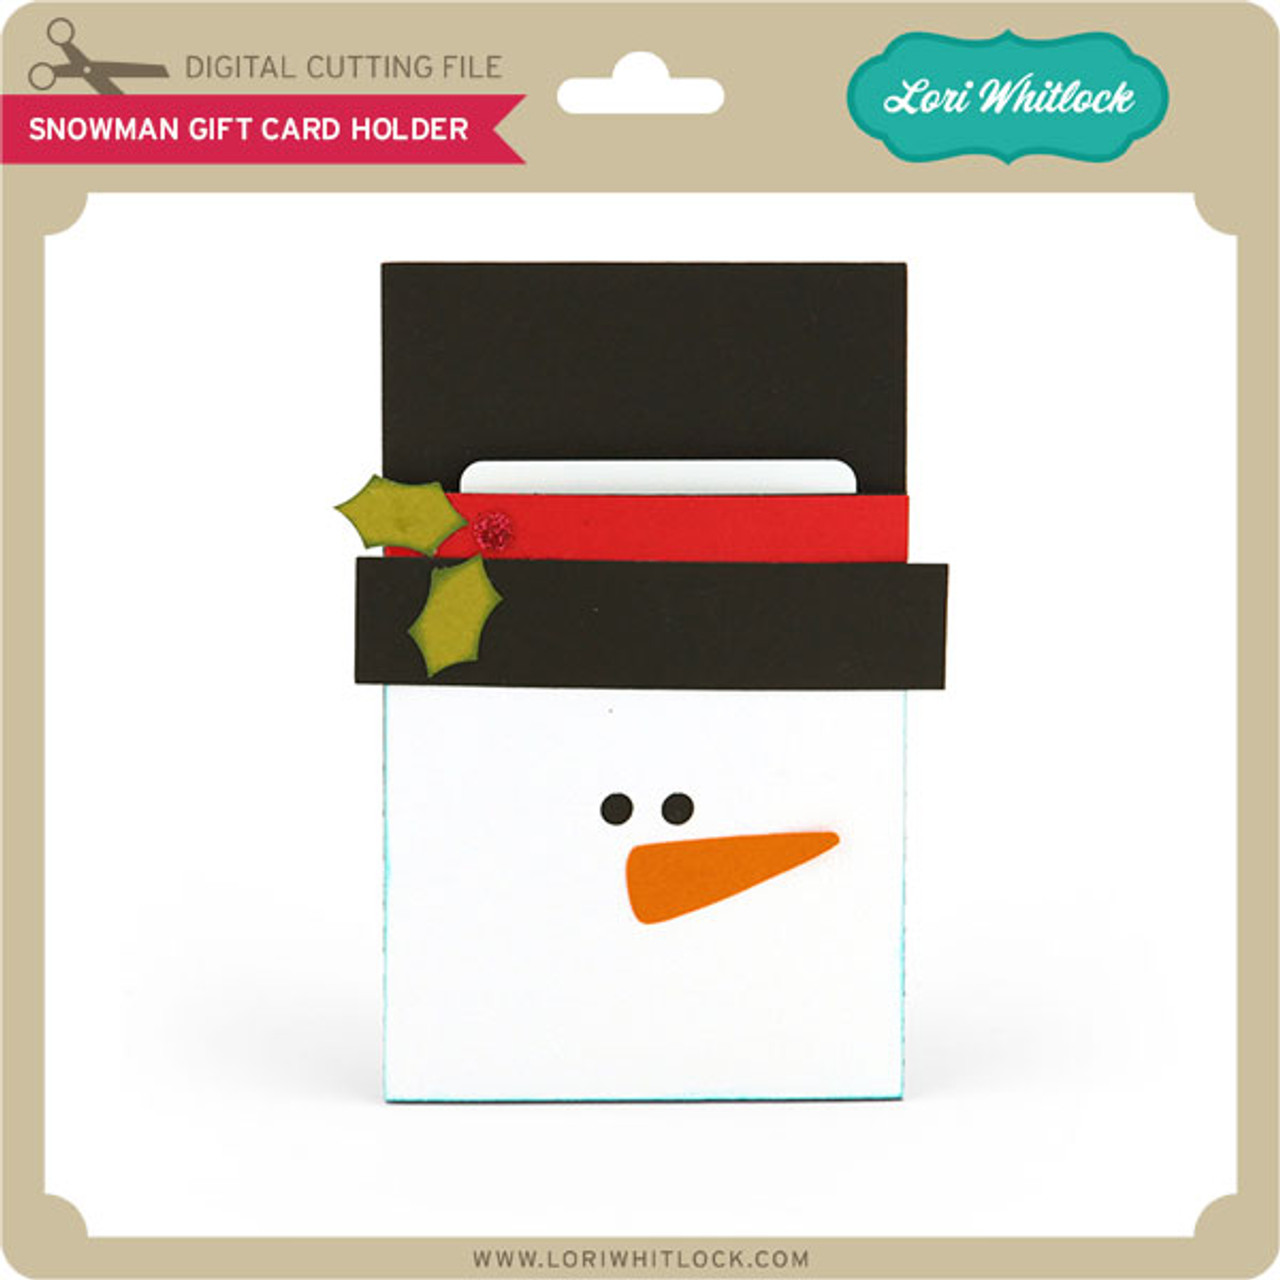 Gift Card Holder Tag Christmas Bundle - Lori Whitlock's SVG Shop